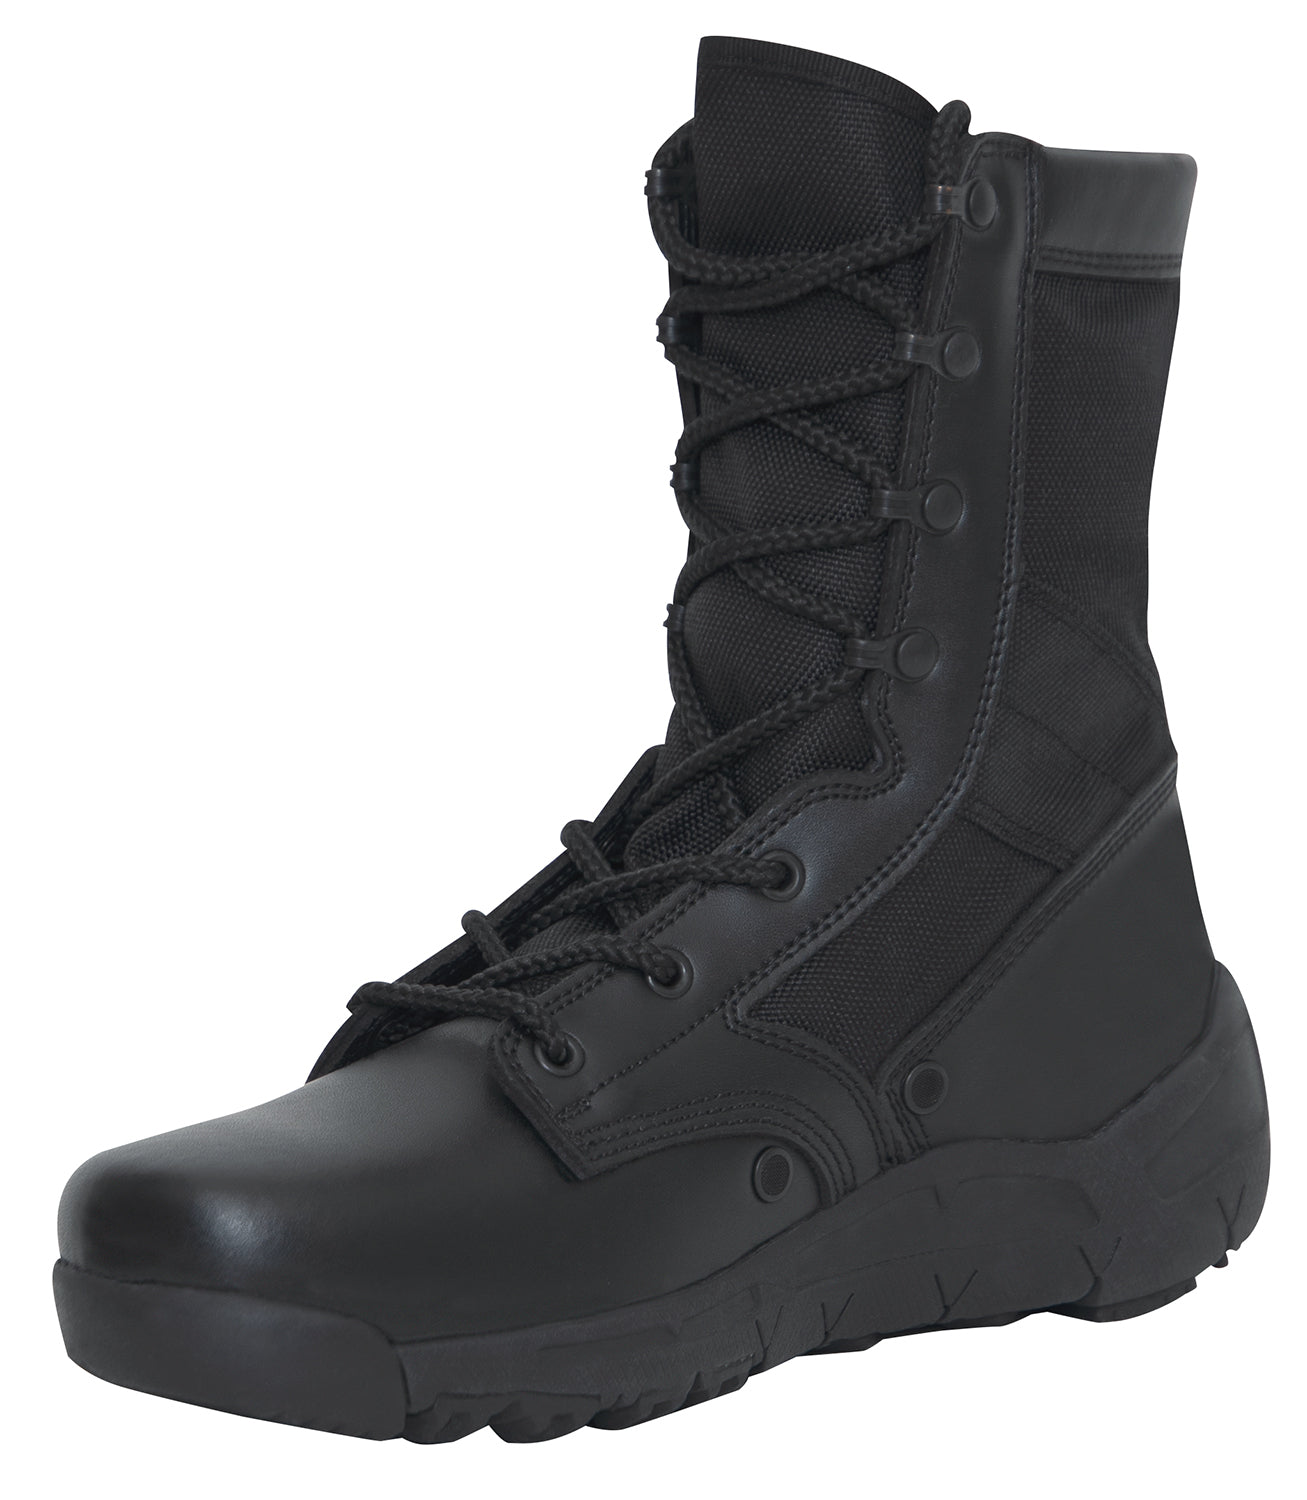 Milspec V-Max Lightweight Tactical Boot - 8 Inch AR 670-1 Compliant Military Gear MilTac Tactical Military Outdoor Gear Australia